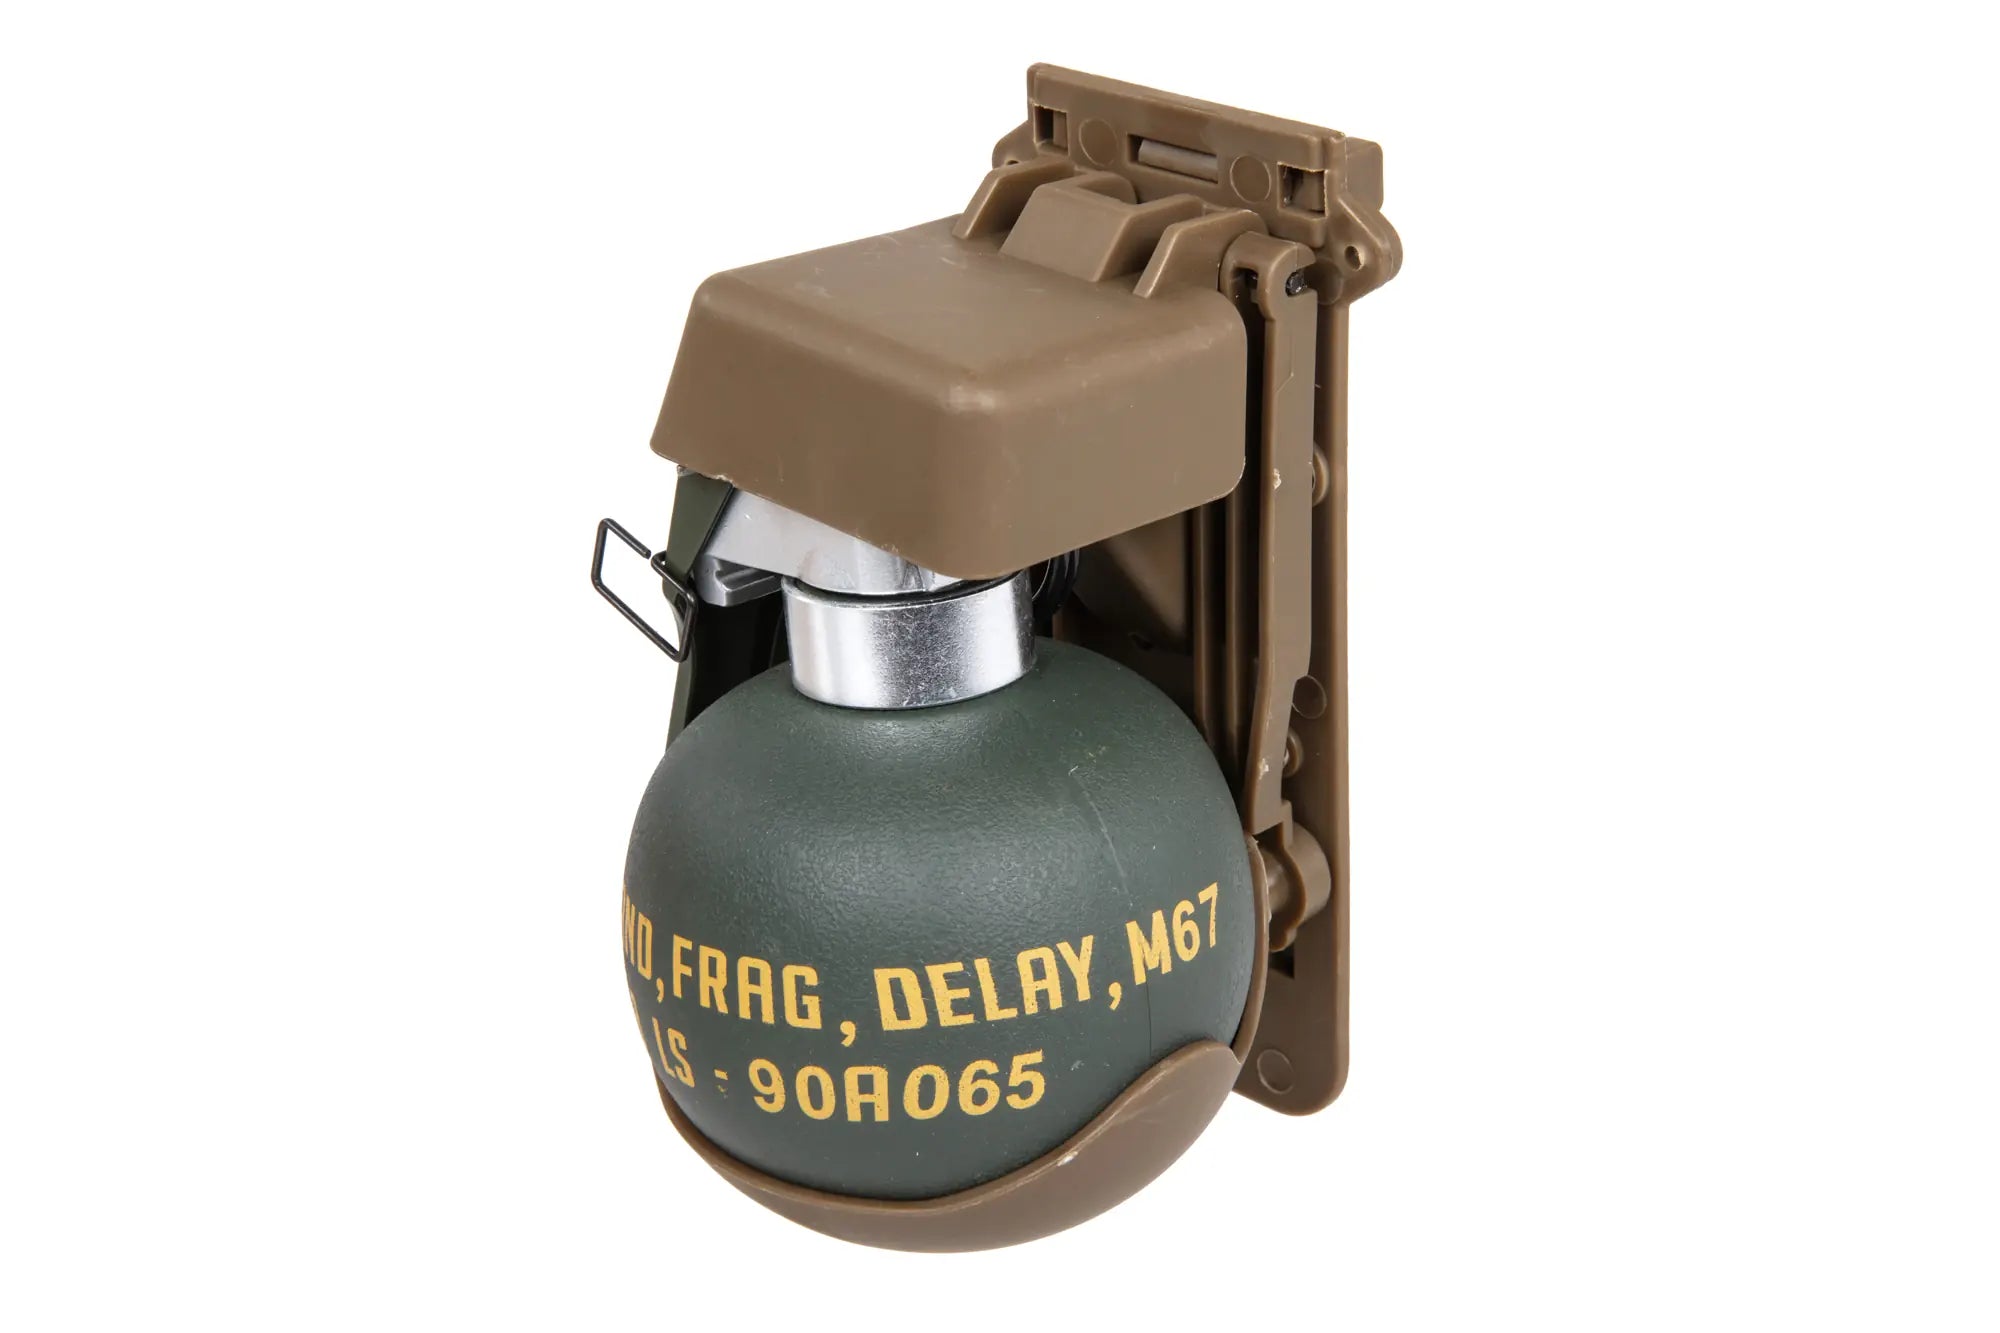 M67 fragmentation grenade dummy with Tan loader-2